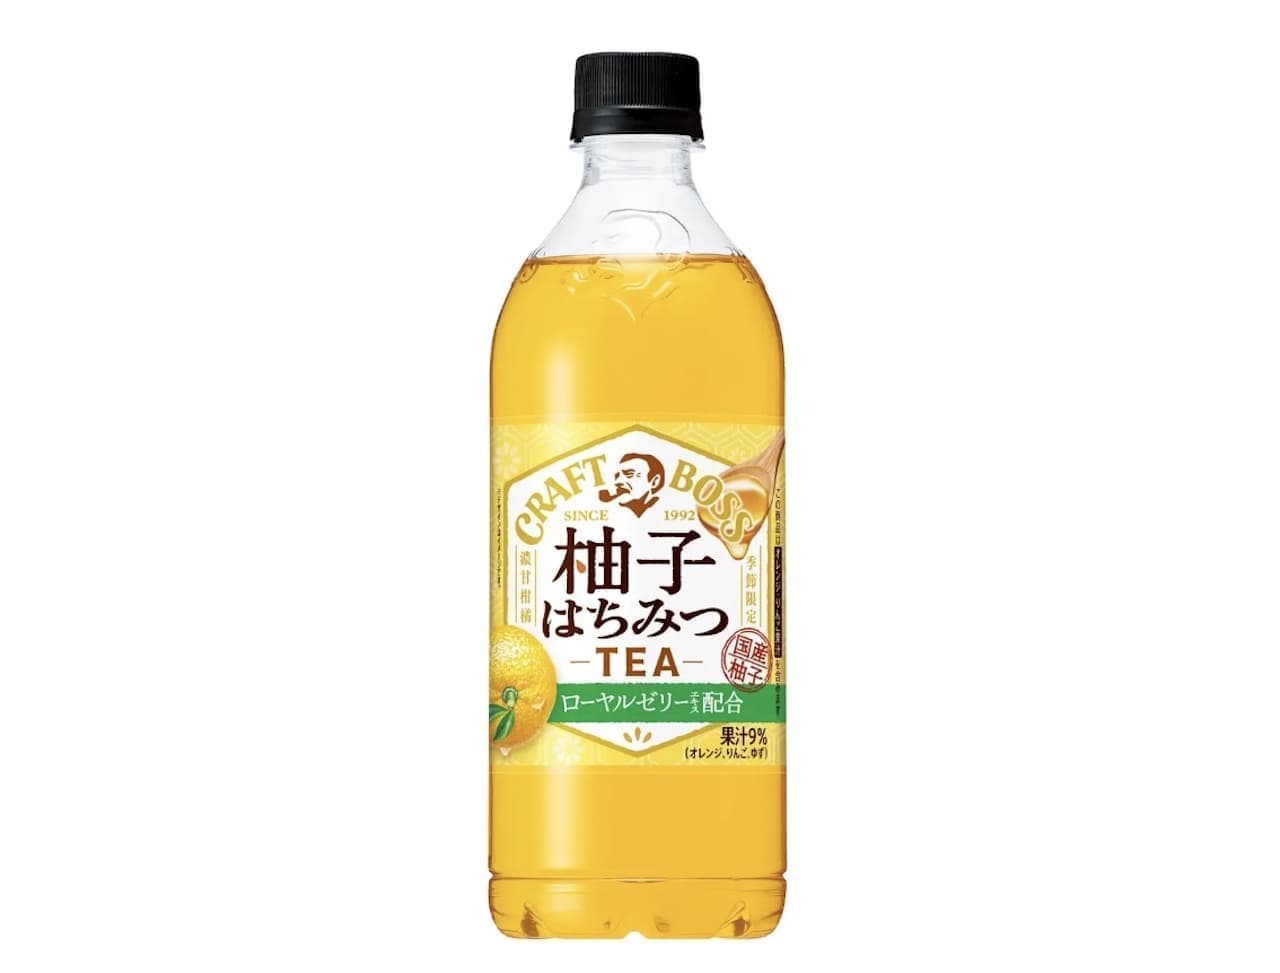 Tea Series "Kraft Boss Yuzu Honey Tea